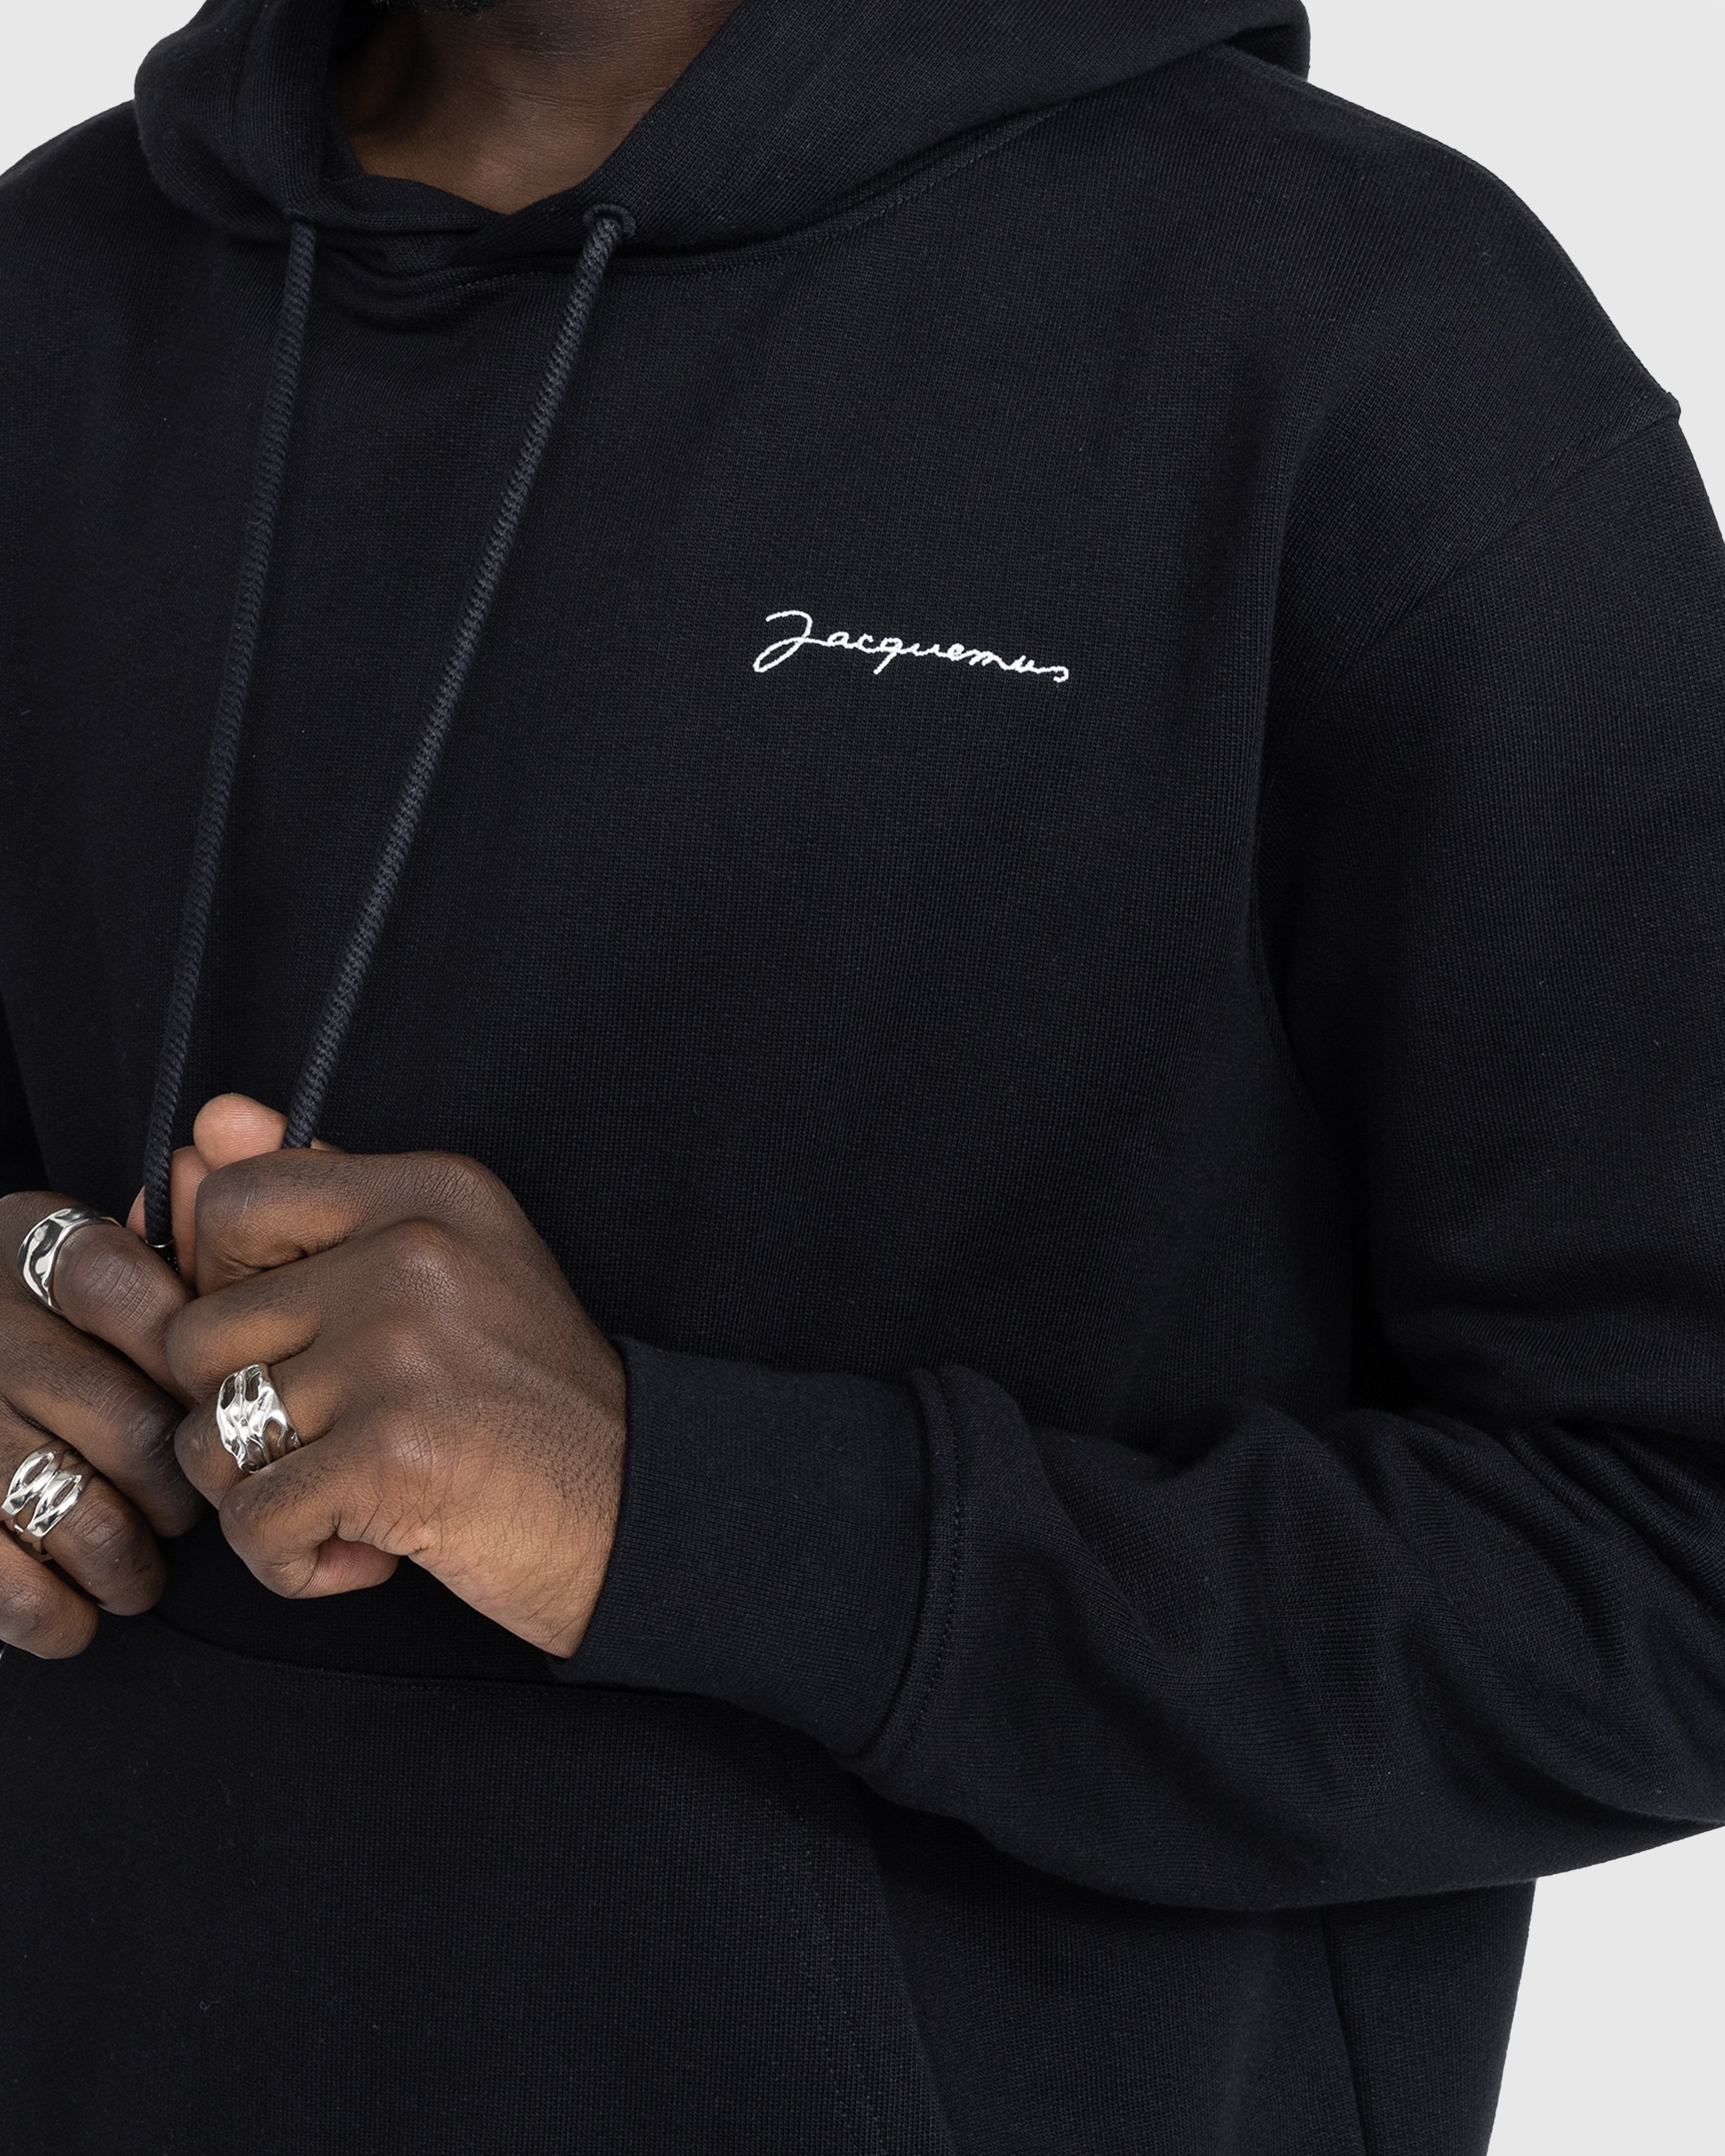 JACQUEMUS - Le Sweatshirt Brode Black - Clothing - BLACK - Image 4